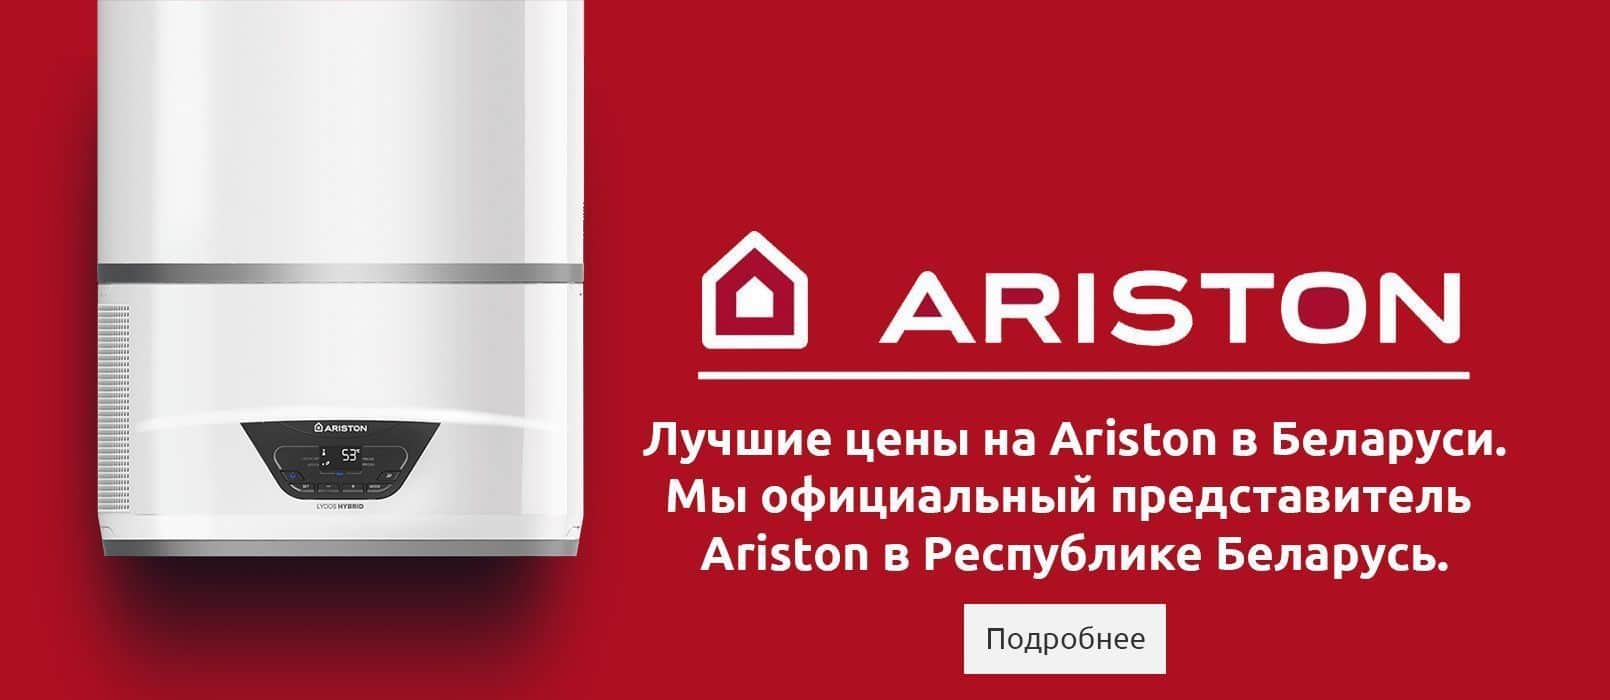 Ariston com. Ariston водонагреватель reklama banner. Реклама Аристон. Котлы Аристон реклама. Ariston водонагреватели реклама.